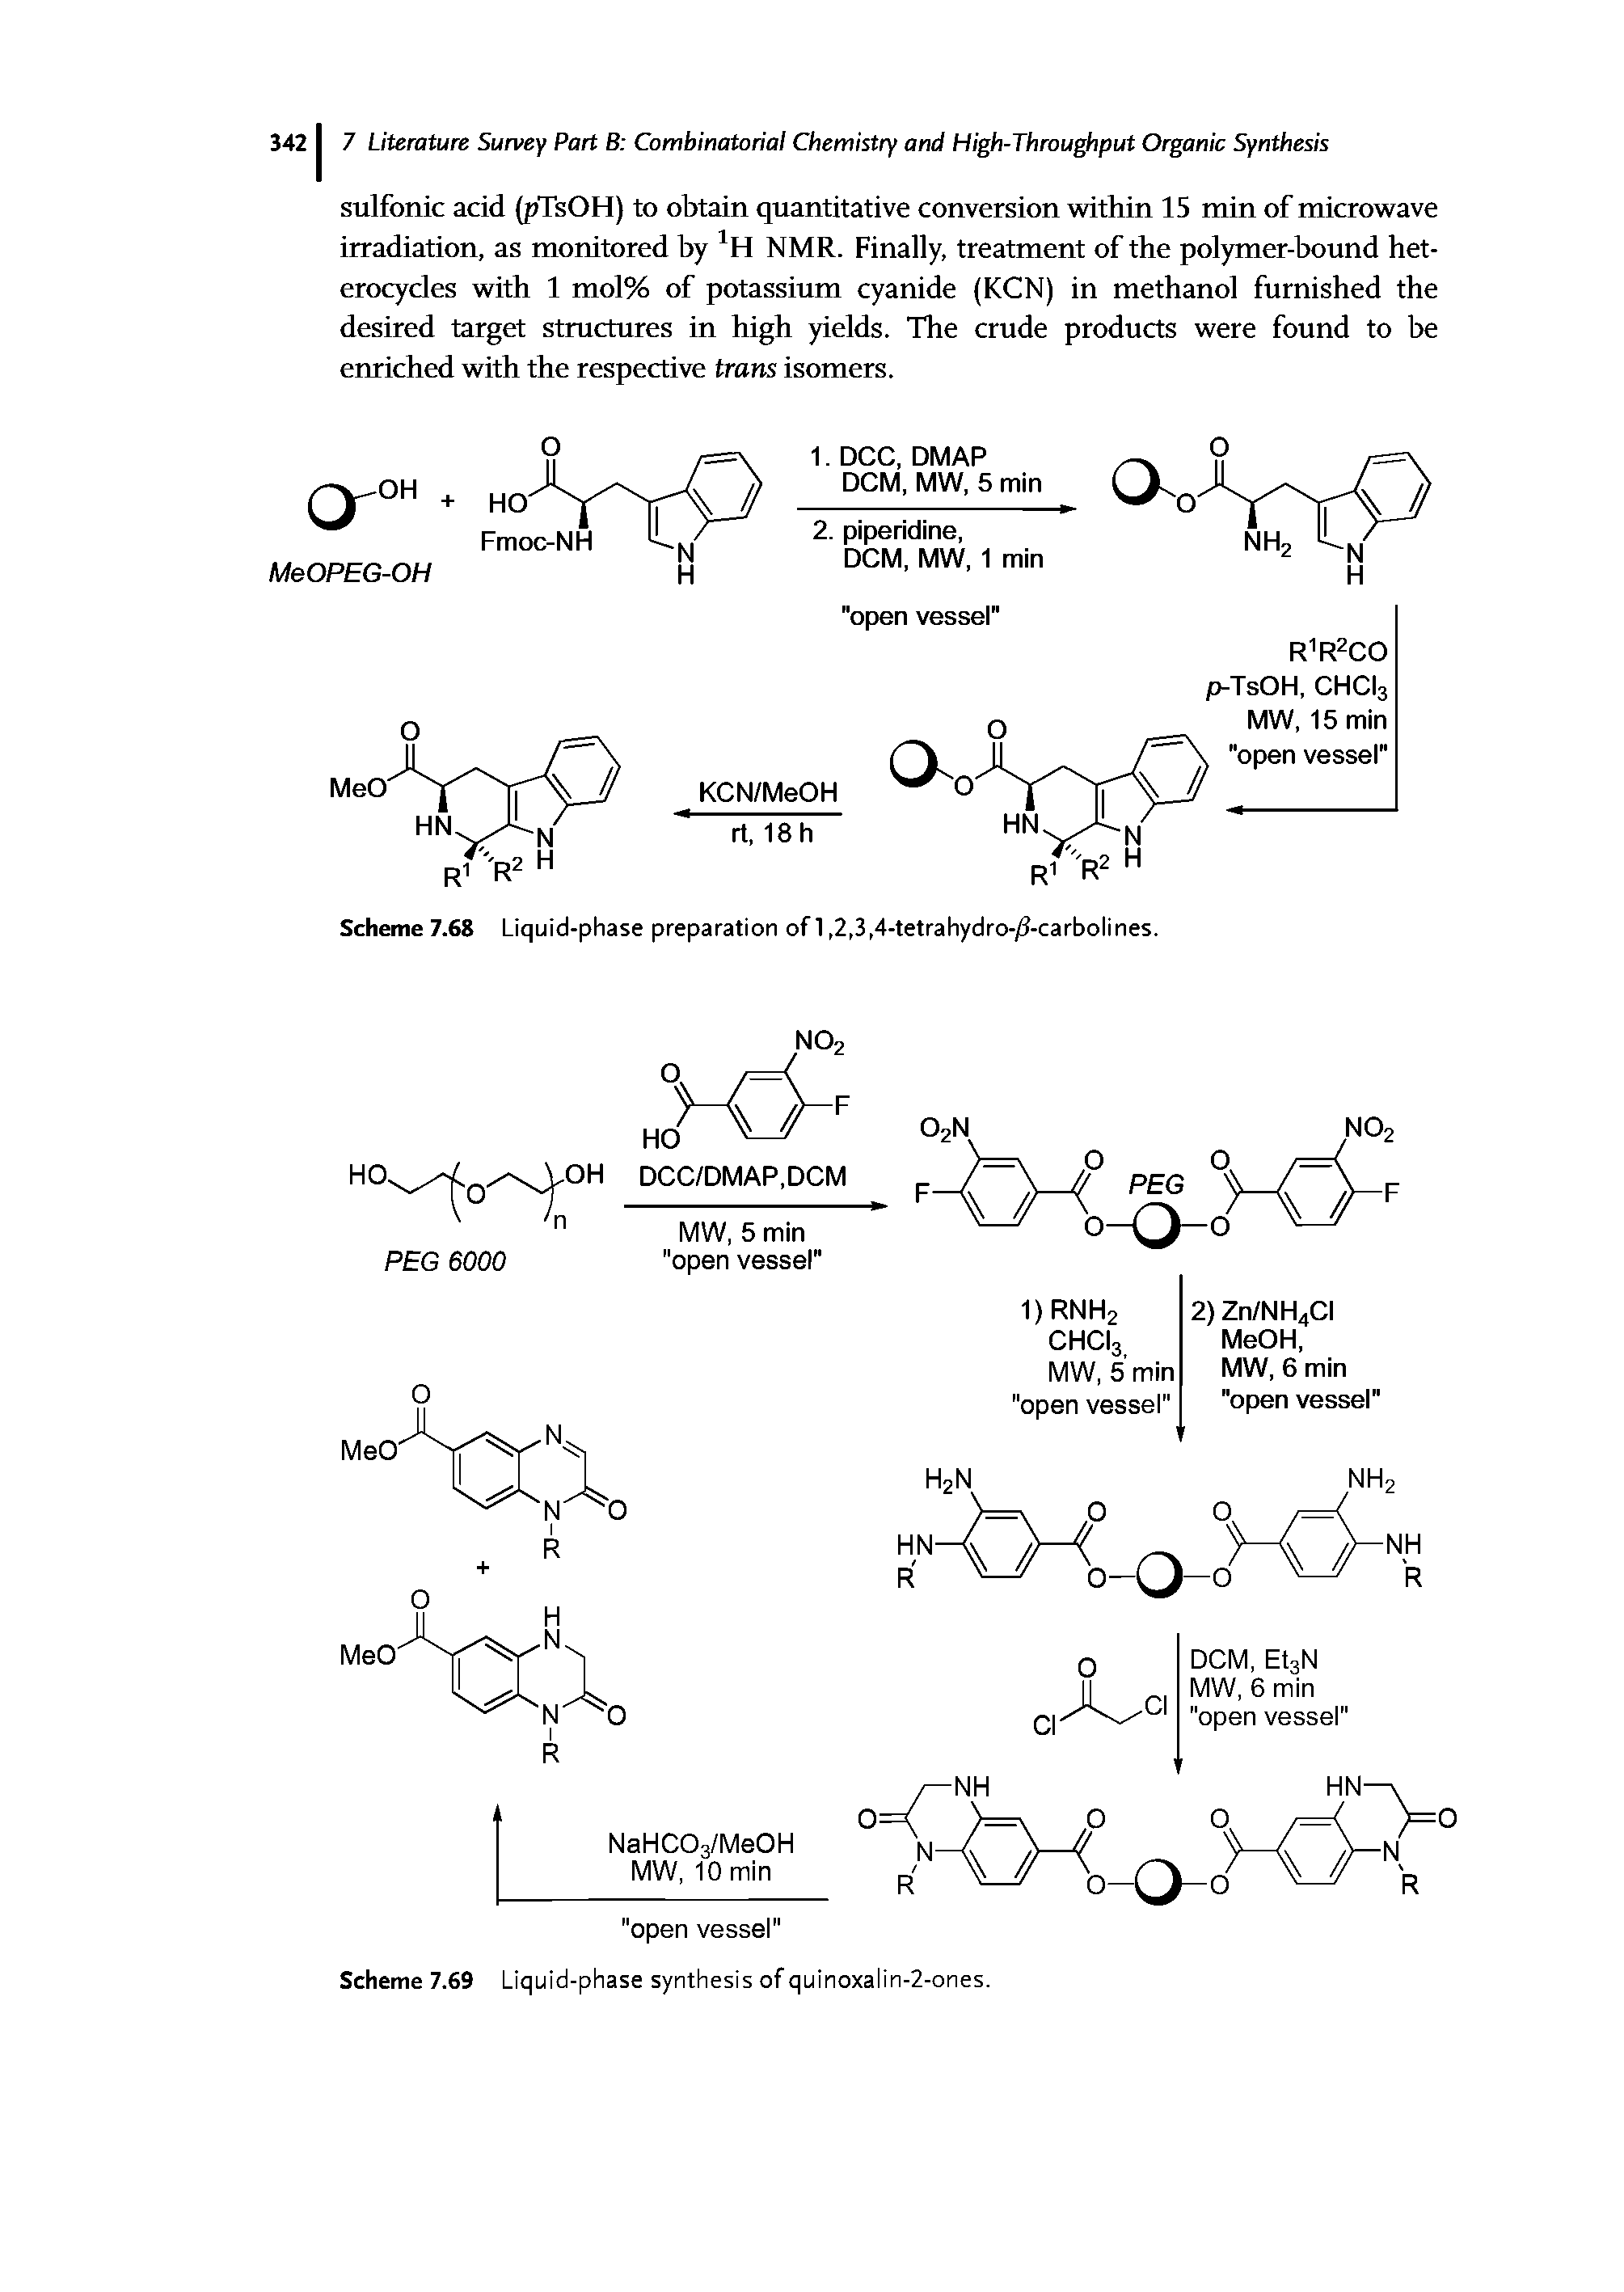 Scheme 7.69 Liquid-phase synthesis of quinoxalin-2-ones.